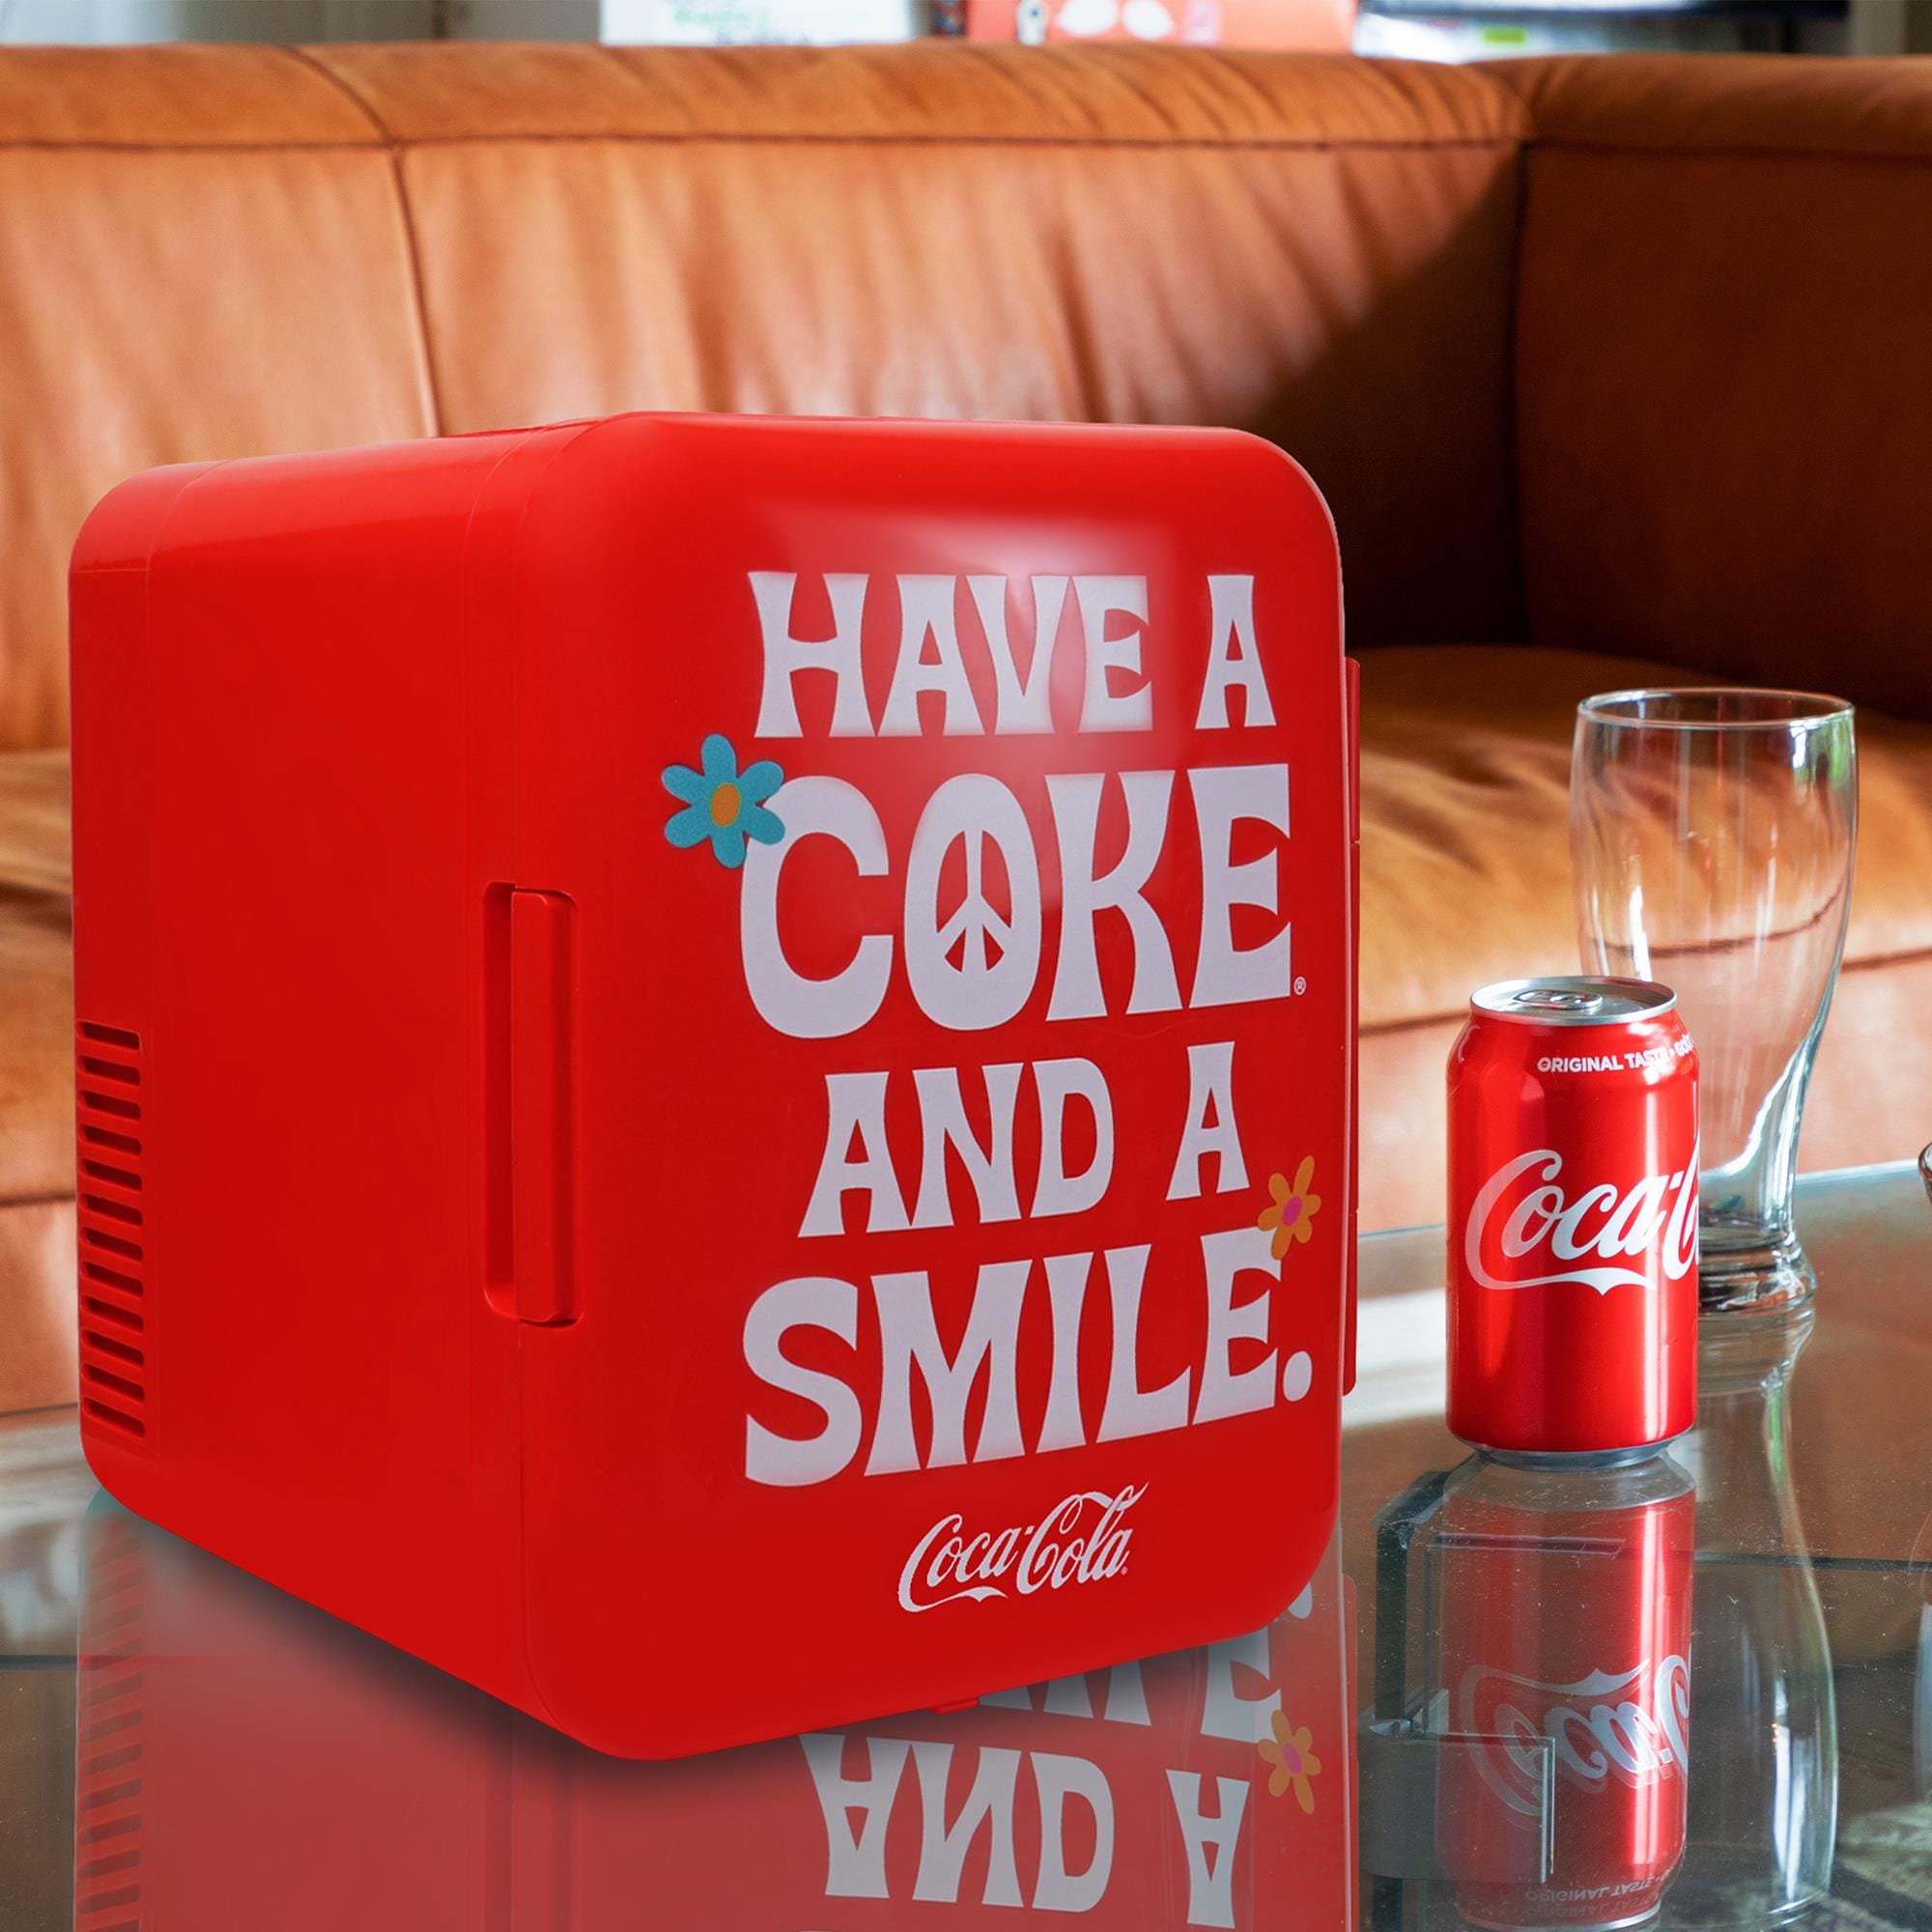 Coca-Cola Coke Zero 0.14-cu ft Standard-depth Freestanding Mini Fridge  (Black, Red) in the Mini Fridges department at